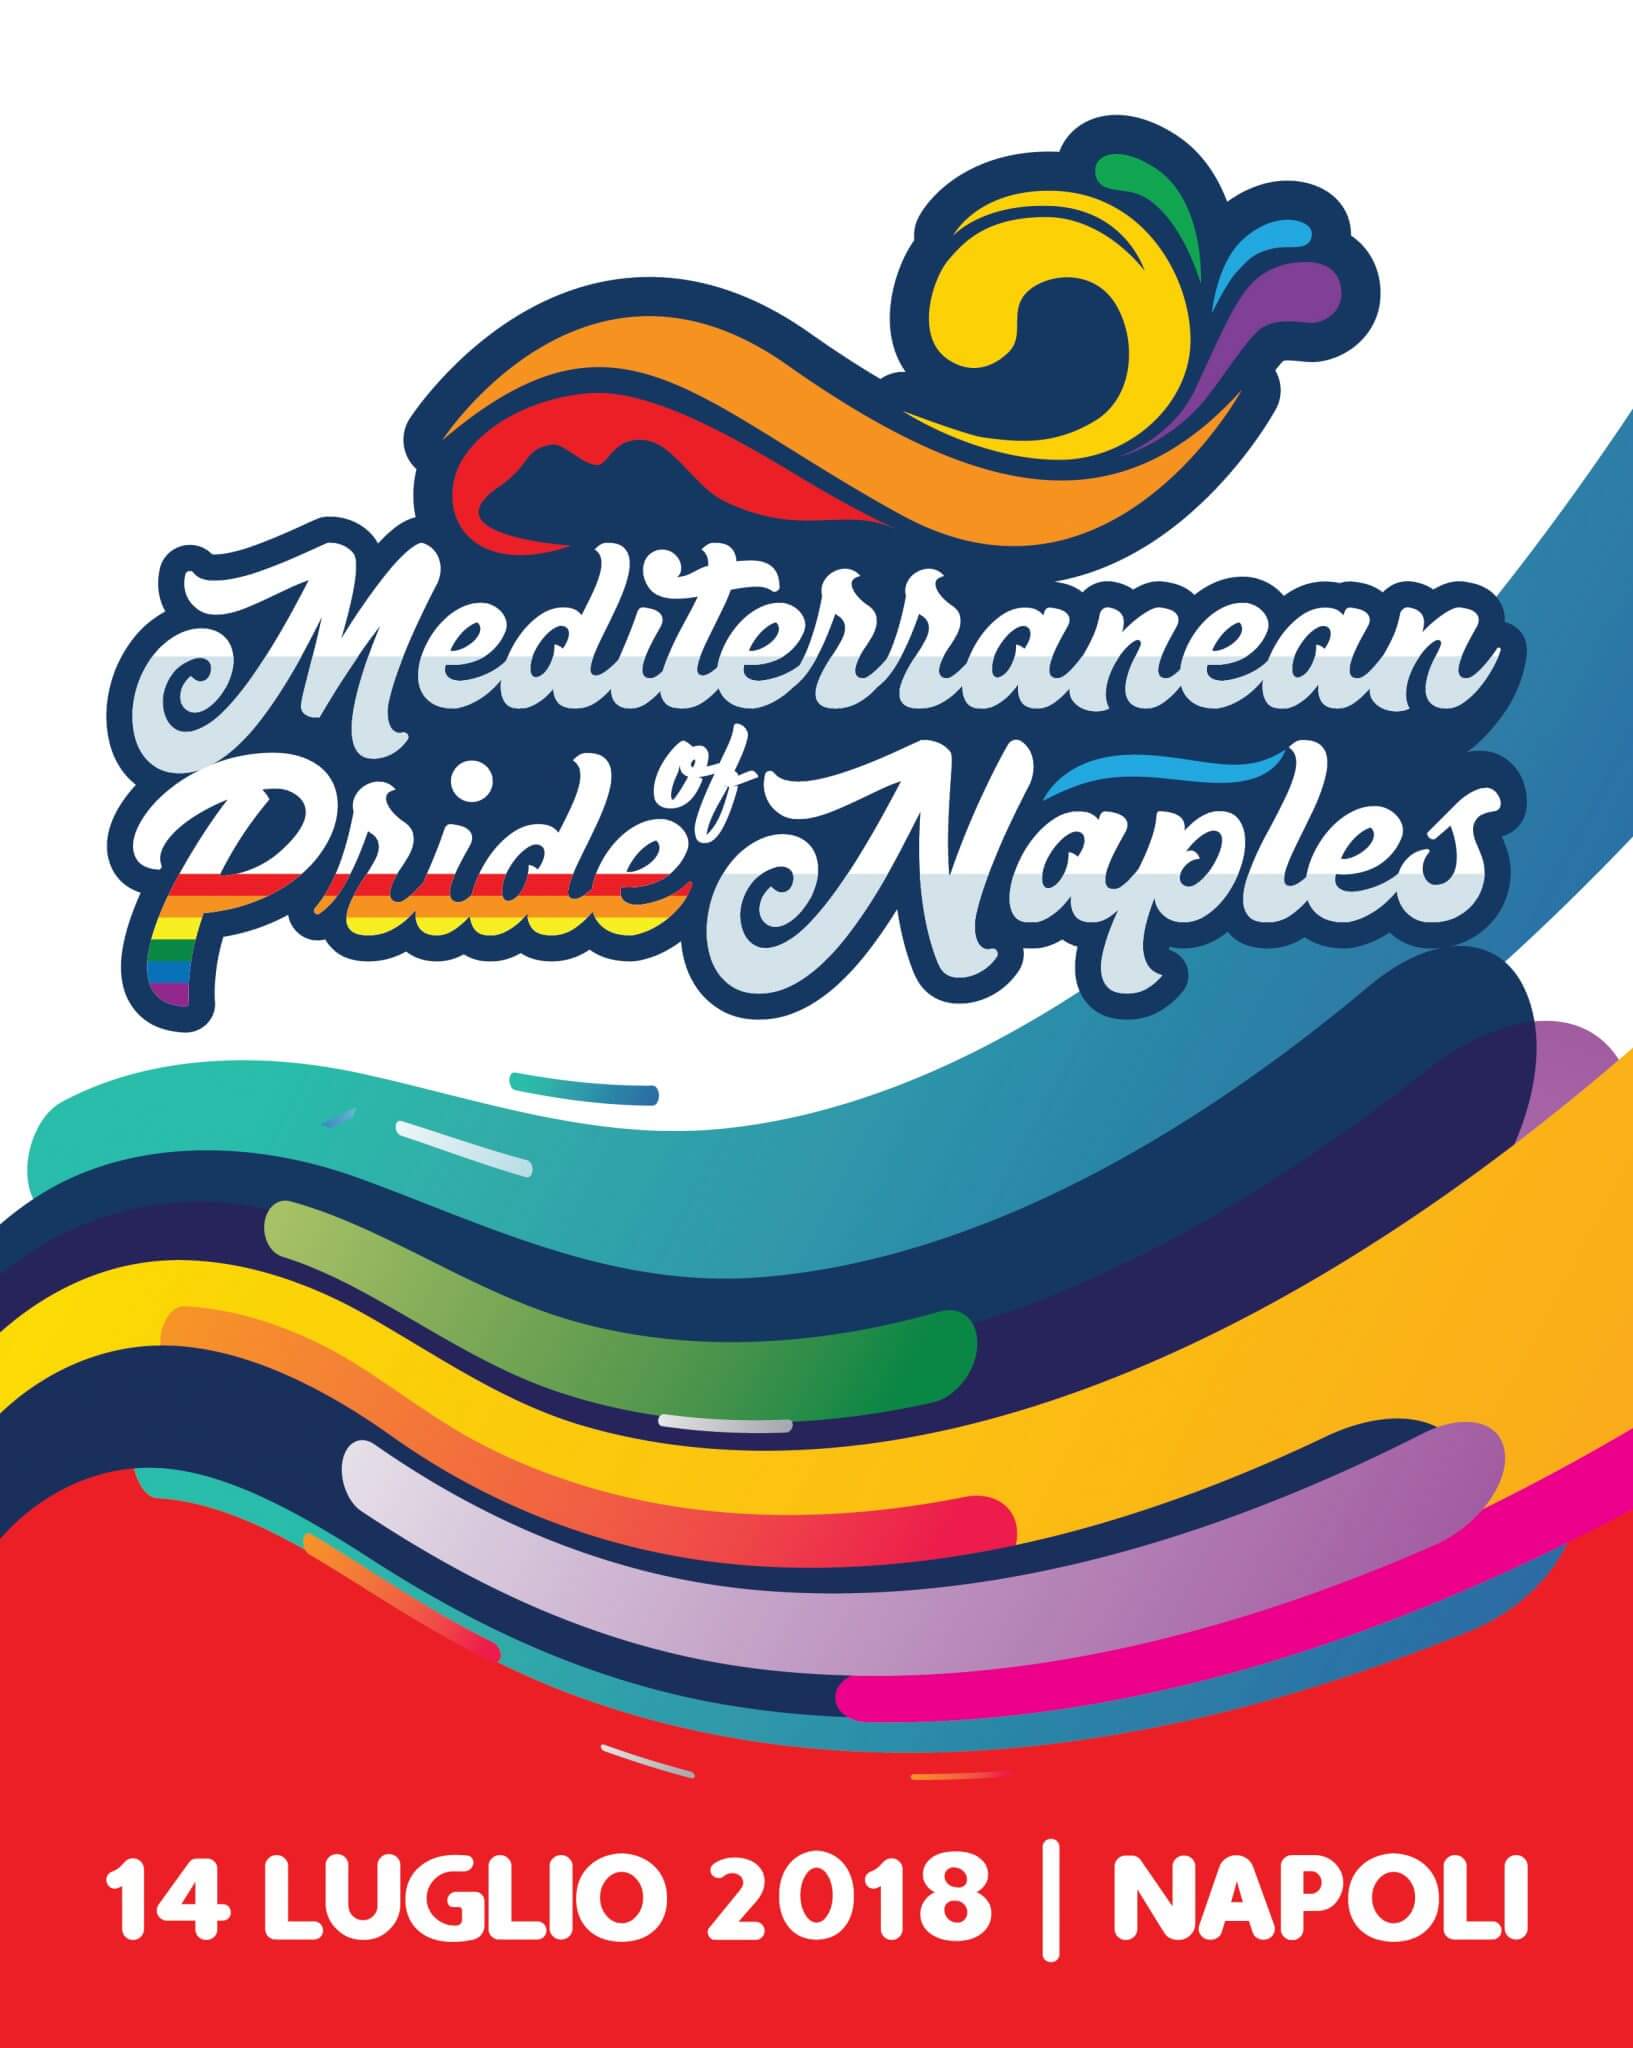 Napoli Pride 2018, lo spot con le famiglie arcobaleno - MPN 18 promo 01 - Gay.it